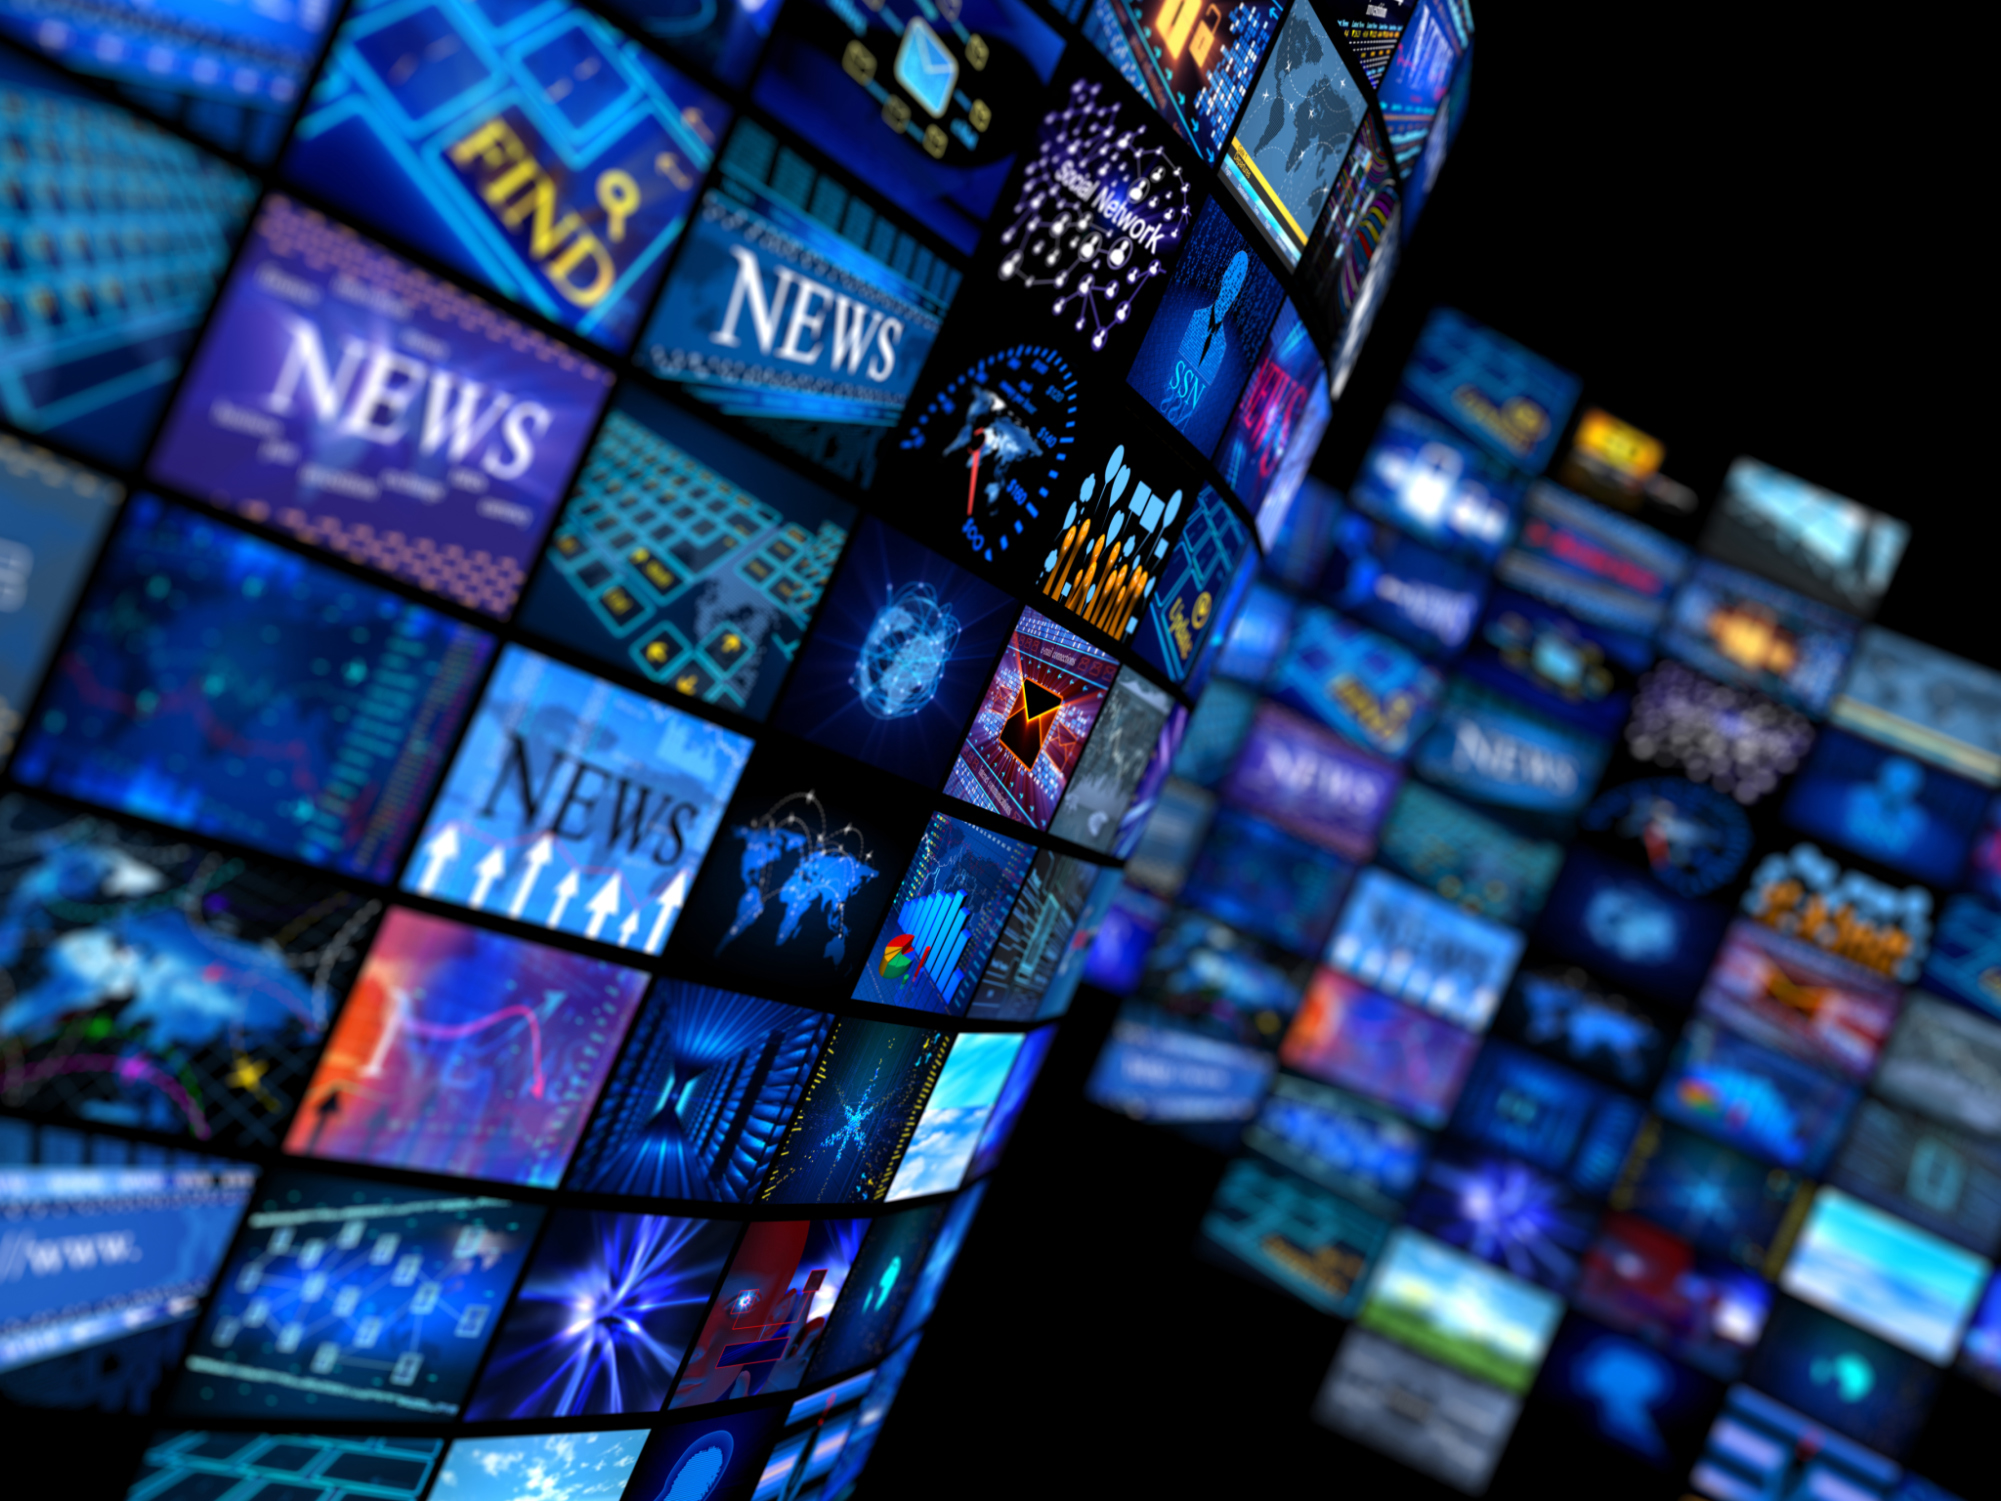 Media convergence news on TV screens